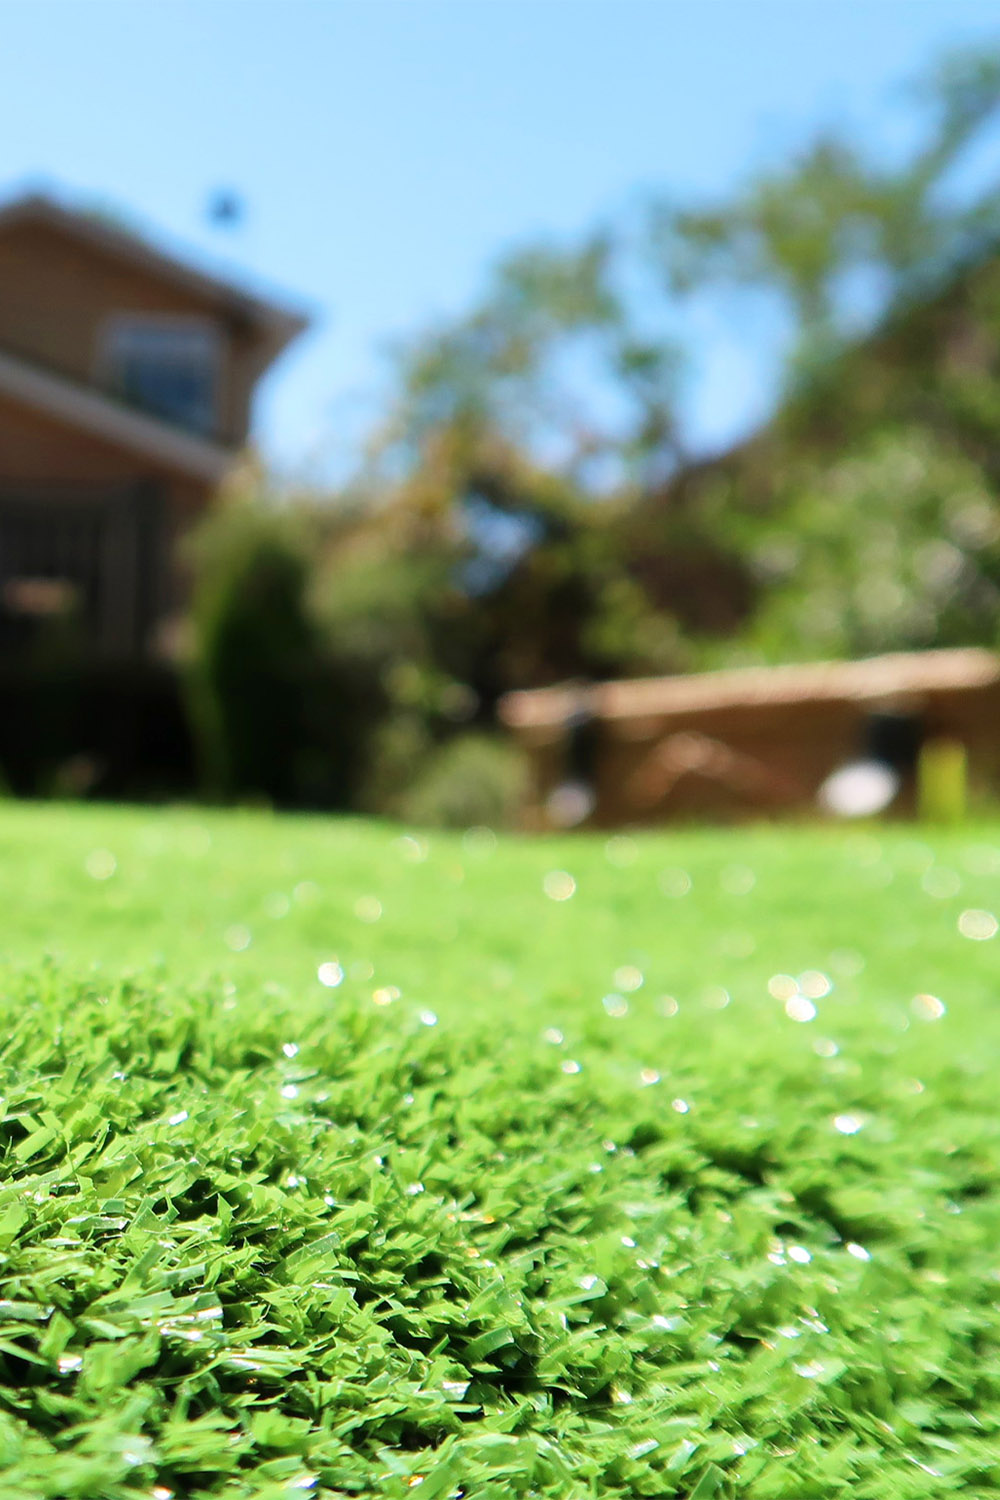 How to Lay Artificial Grass: A gardener’s guide